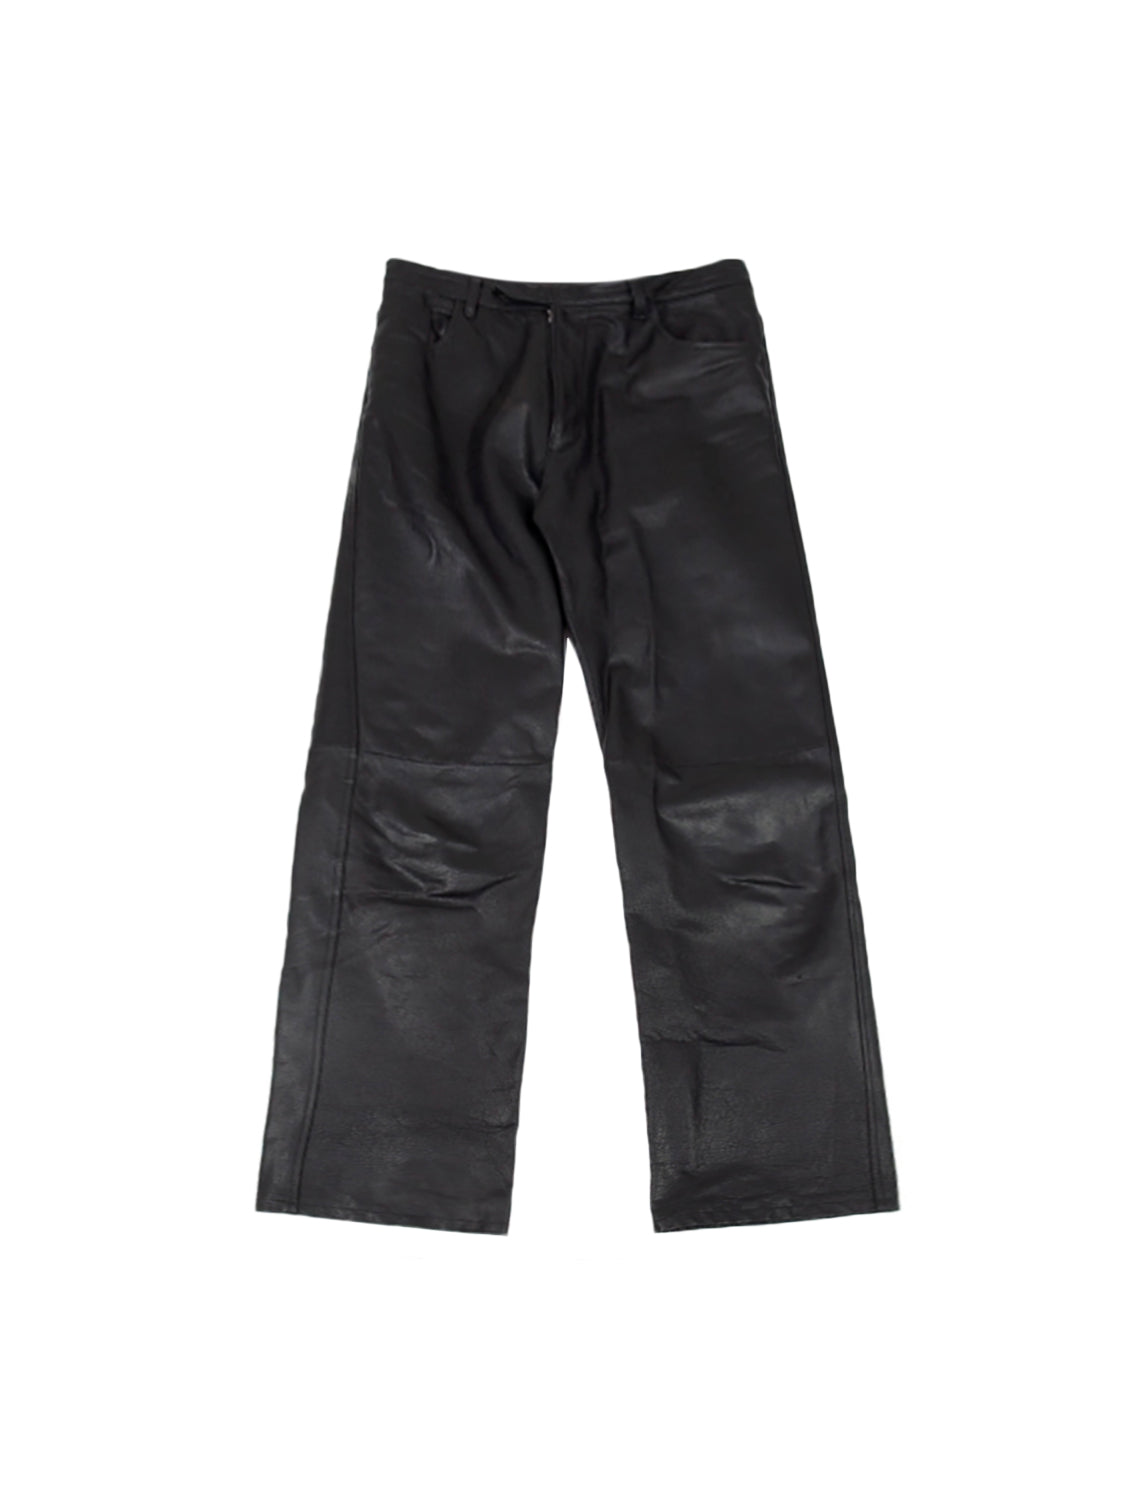 Jean Paul Gaultier 2000s Homme Black Leather Pants